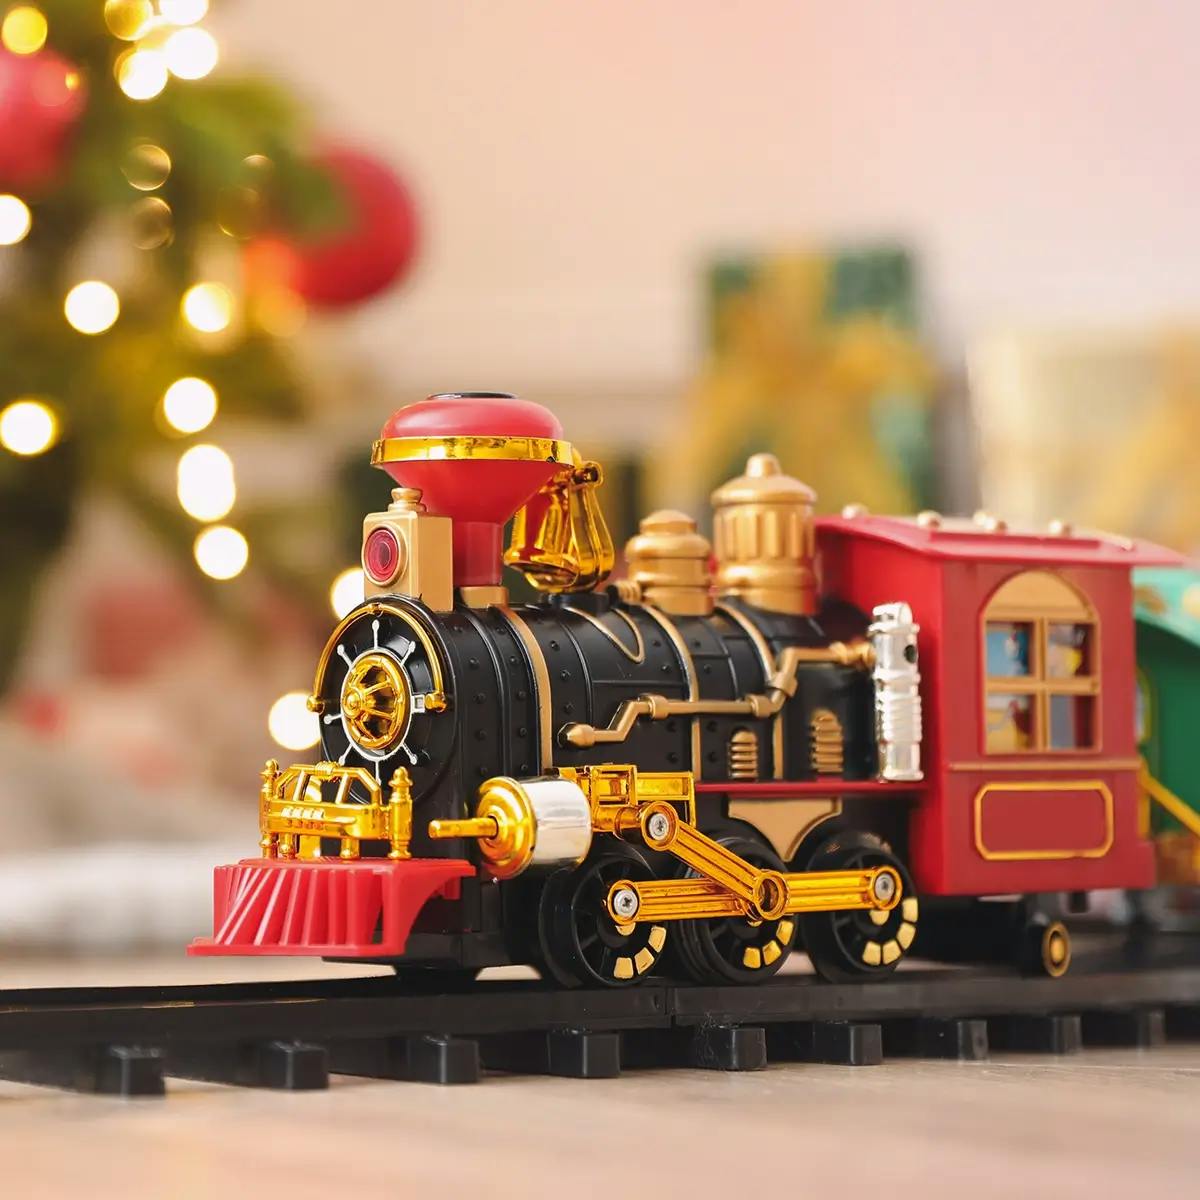 Closeup of a model train under a Christmas tree.